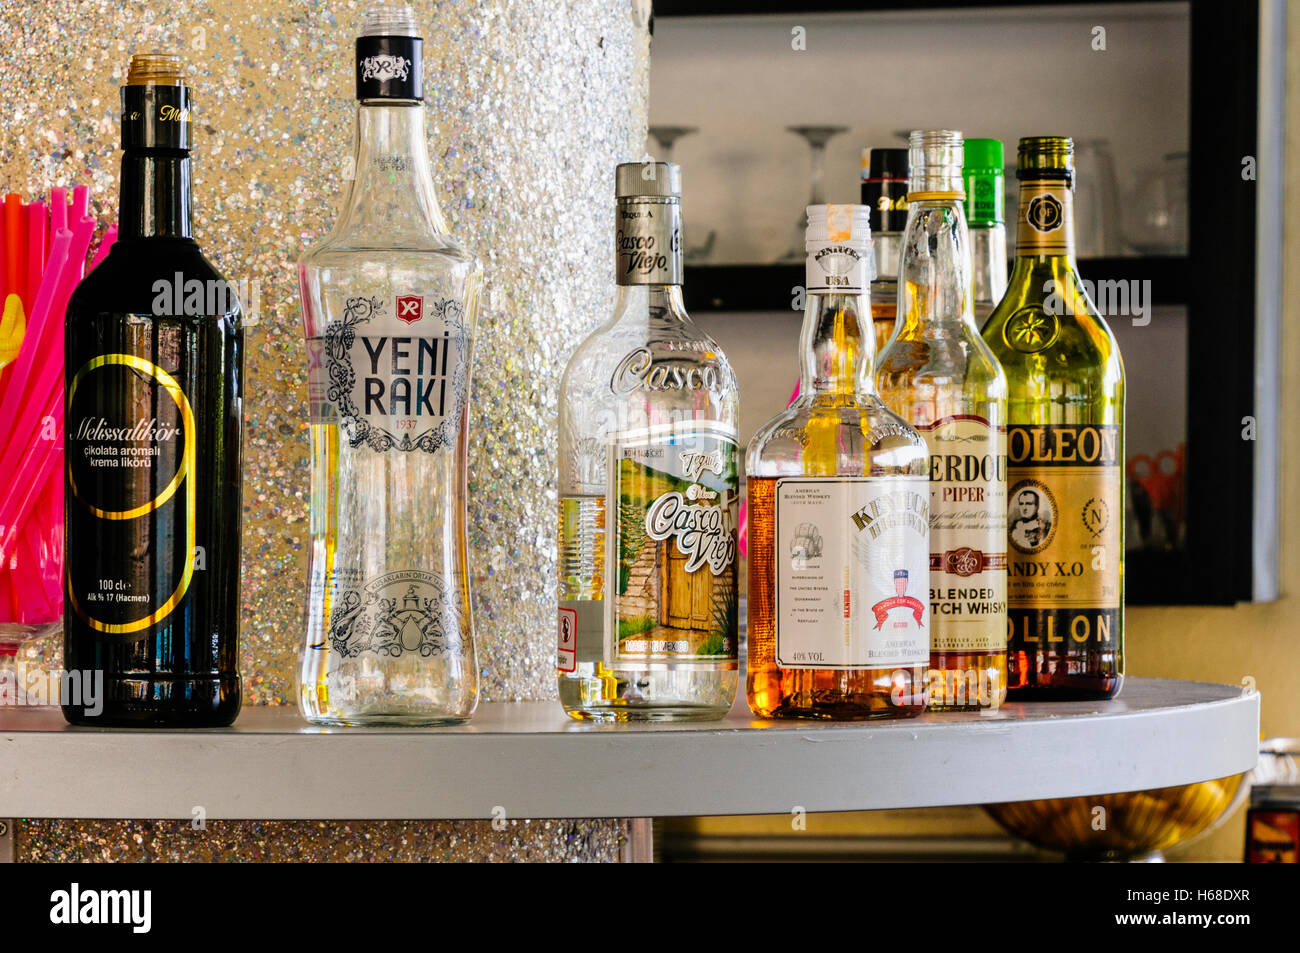 Spirits, including Raki, Vodka, Brandy, Scotch Whiskey, on the shelf of a bar in a Turkish all-inclusive hotel. Stock Photo